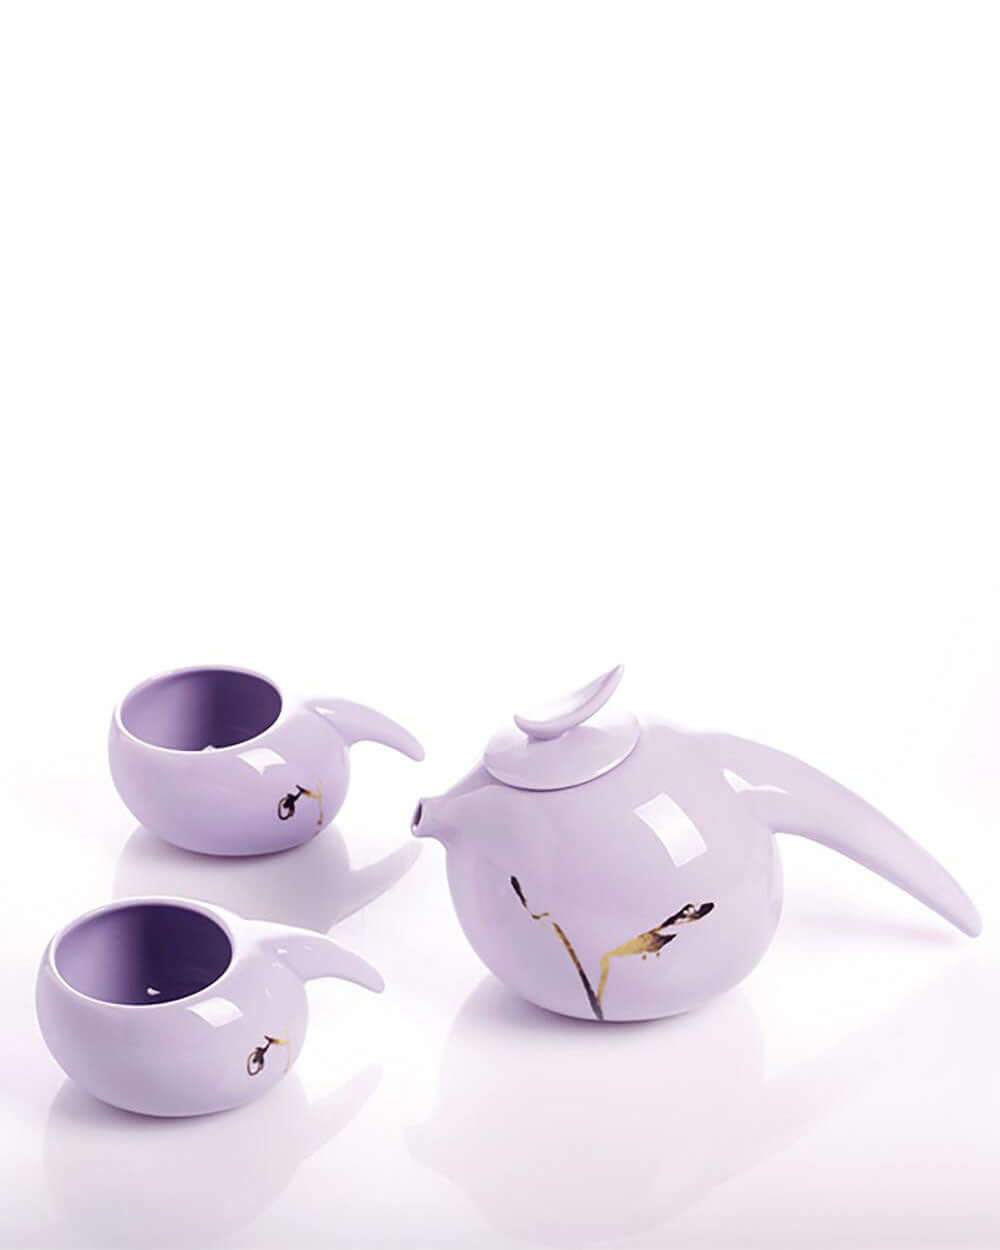 LIULI Crystal Art Bone China Tea Set, "Robin, Herald of the Dawn" (1 Teapot, 4 Teacups) Limited Edition